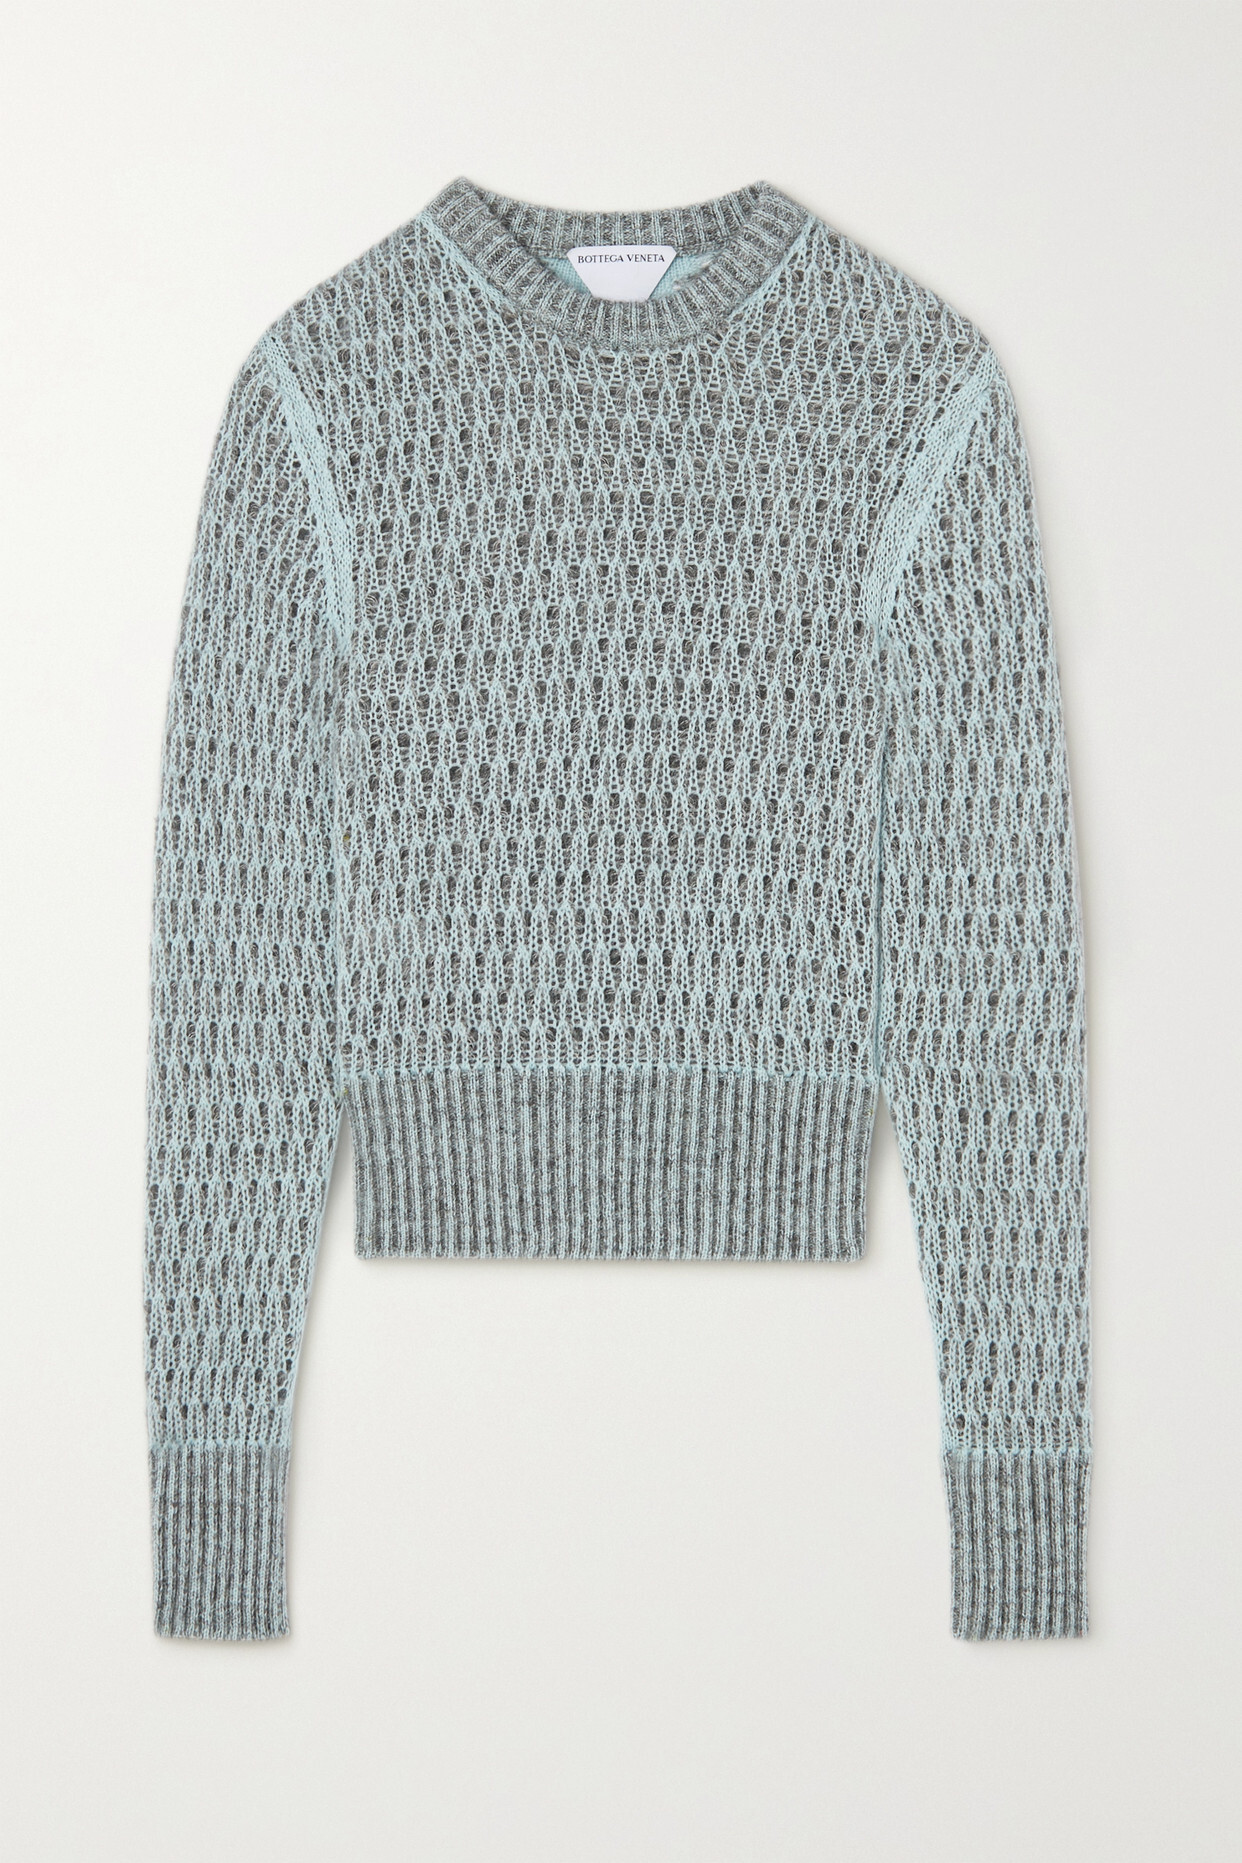 Bottega Veneta - Open-knit Wool-blend Sweater - Gray